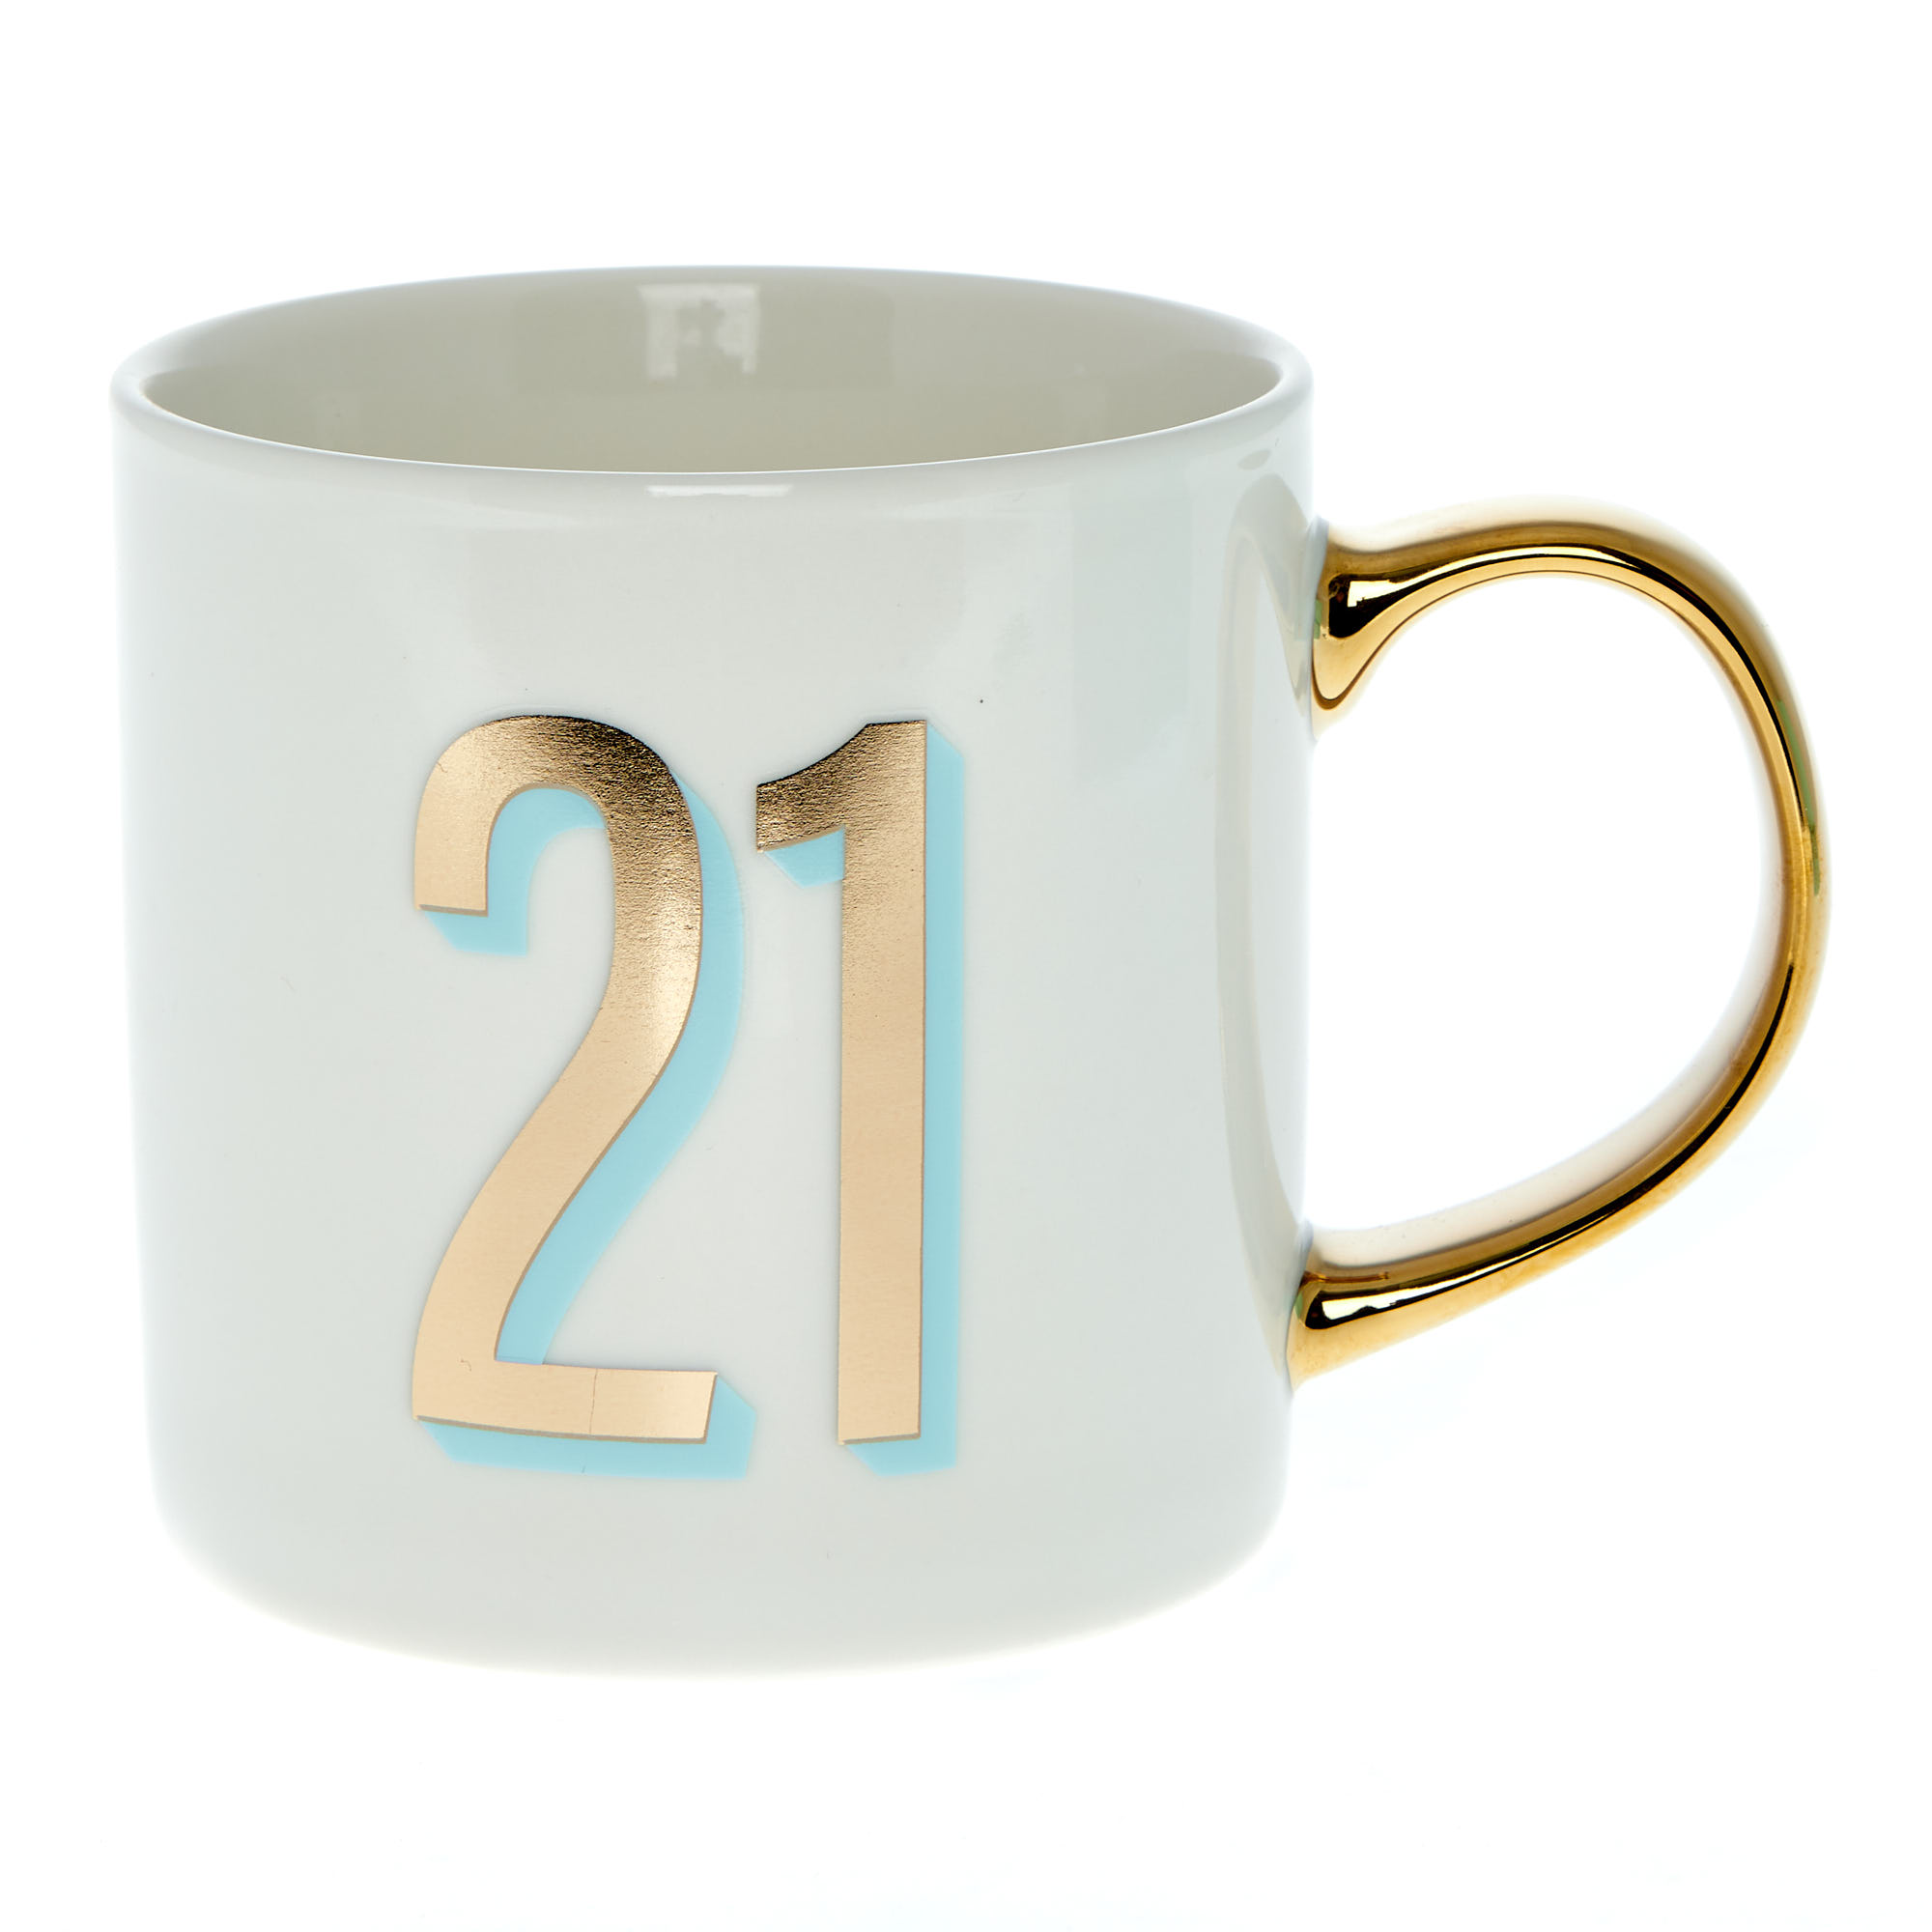 Blue & Gold 21st Birthday Mug